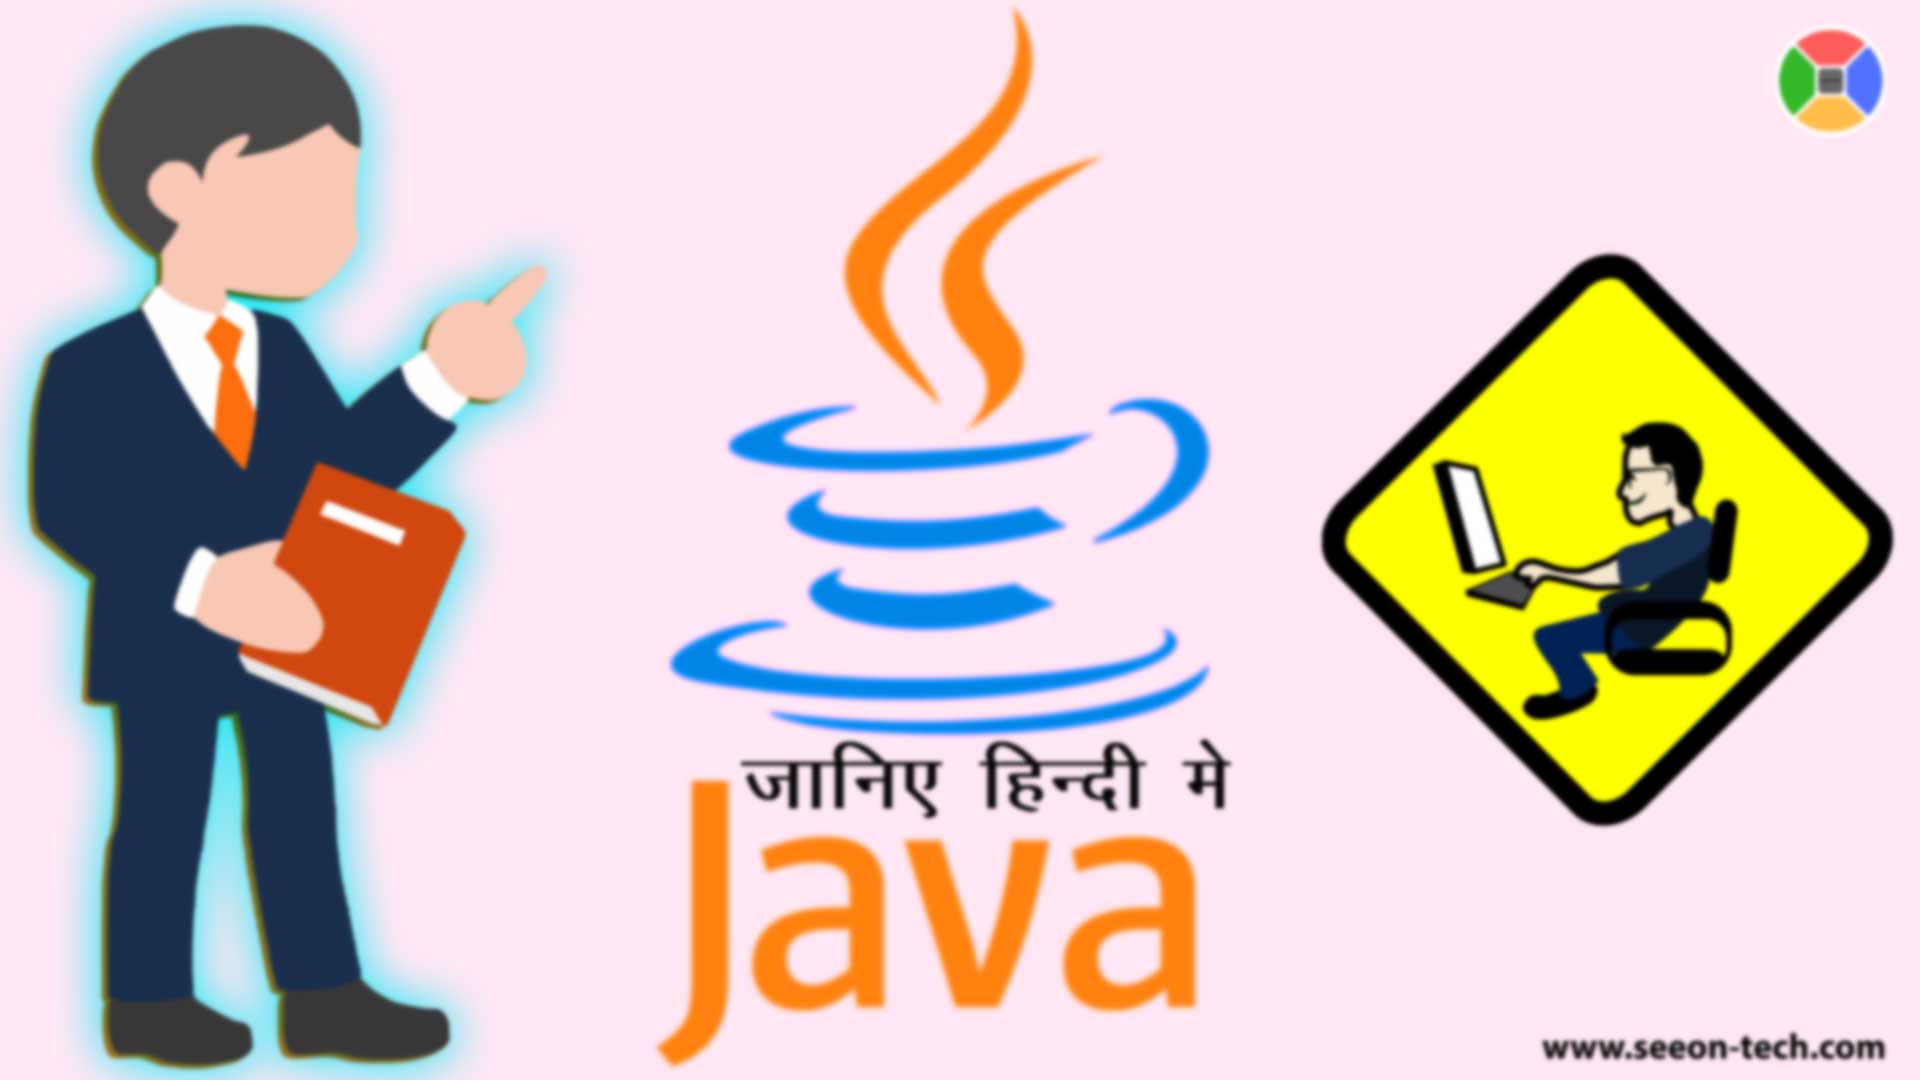 Features OR Characteristics Of Java in Hindi [ जावा लैंग्वेज की विशेषताएं ]